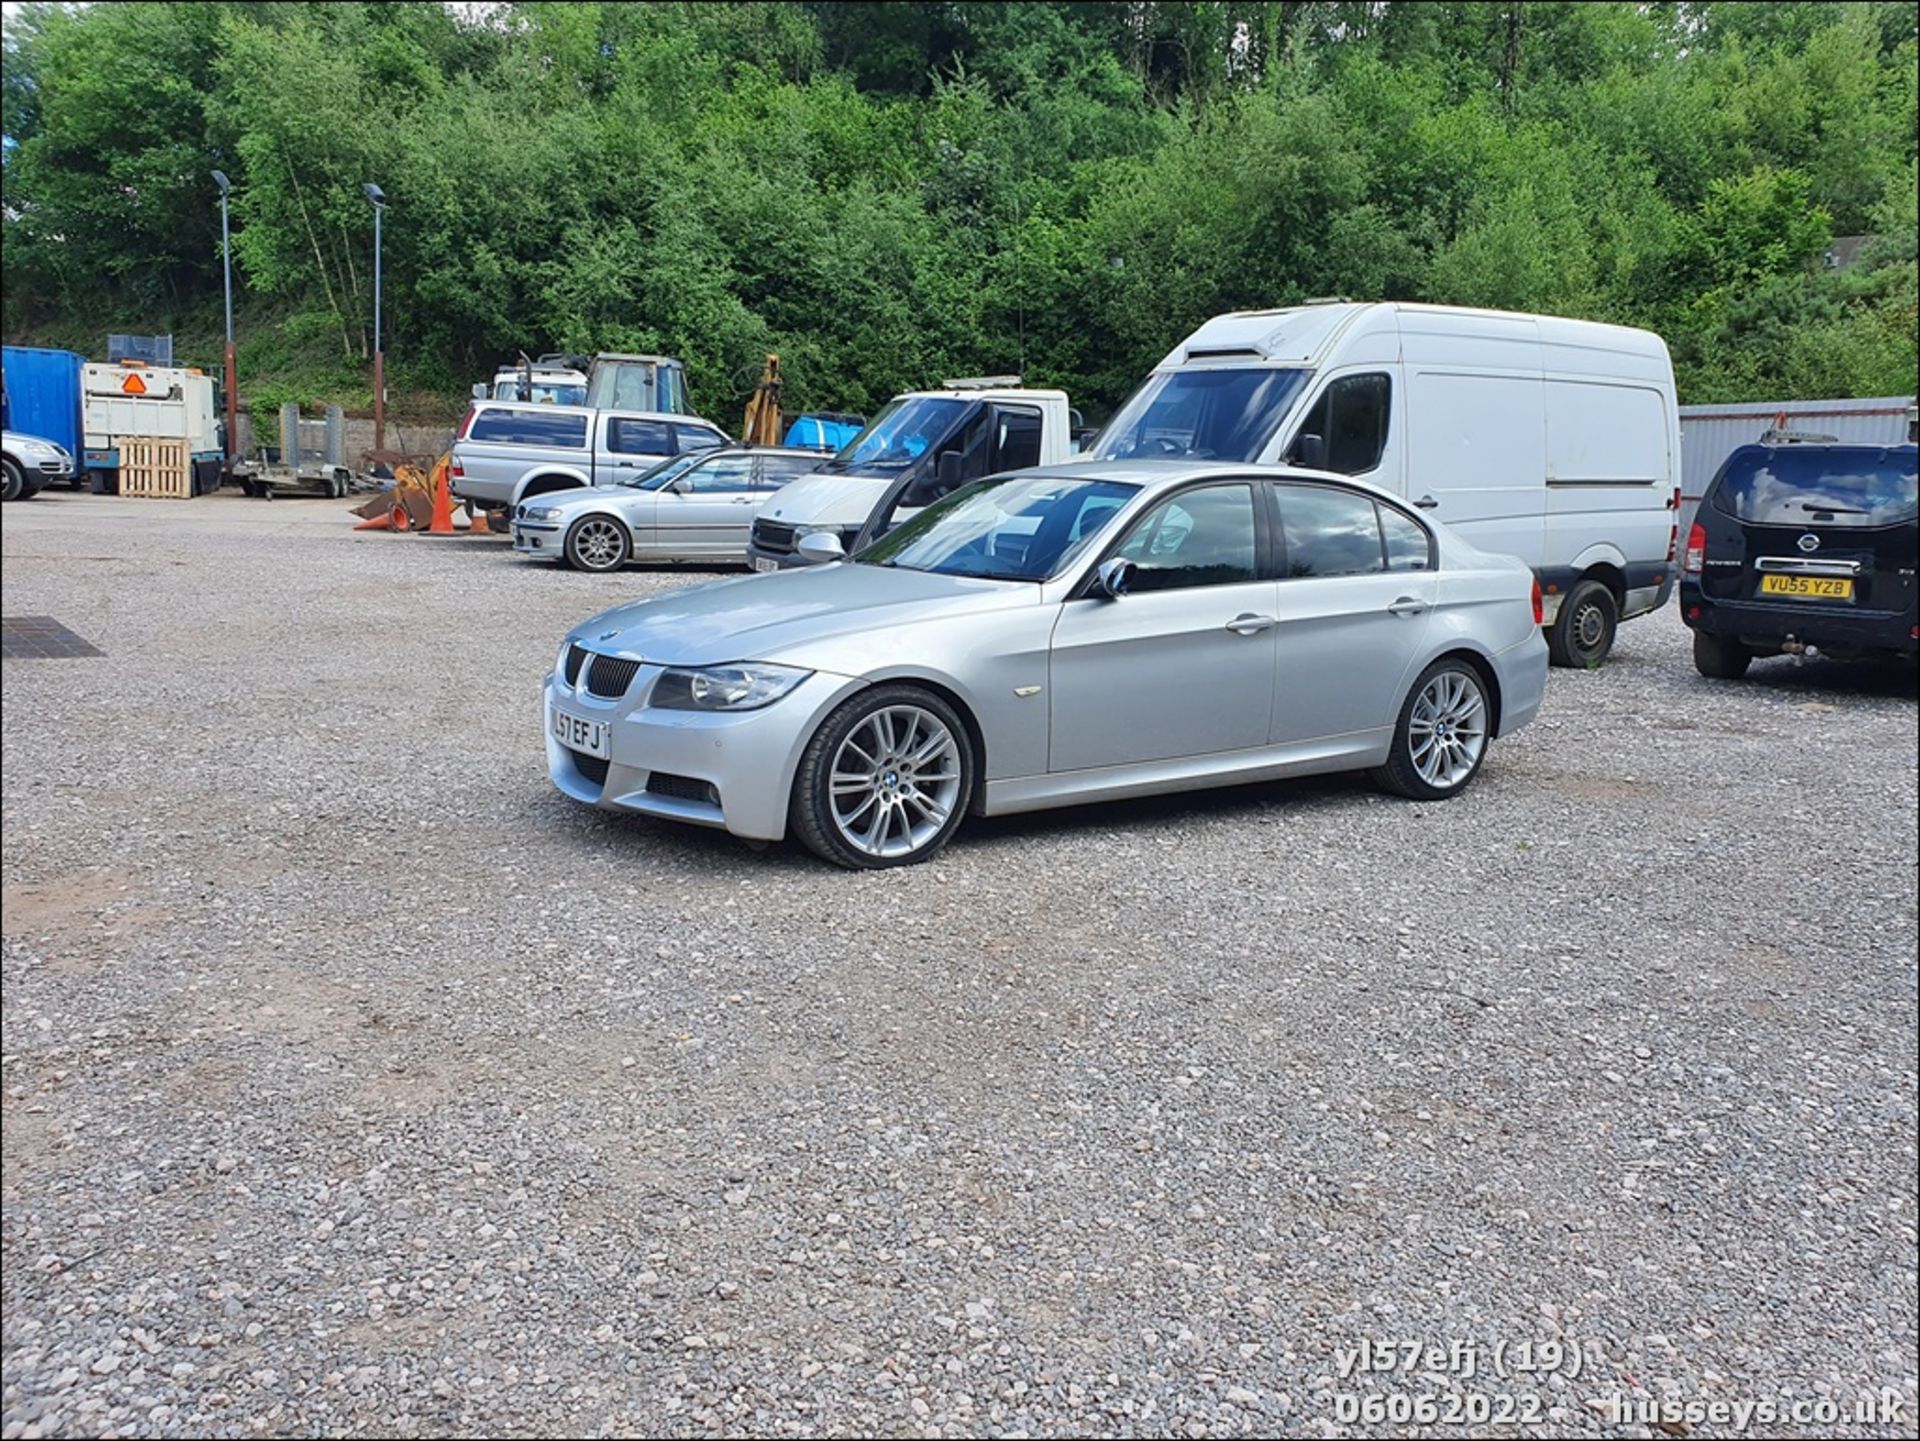 08/57 BMW 330D M SPORT AUTO - 2993cc 4dr Saloon (Silver) - Image 19 of 39